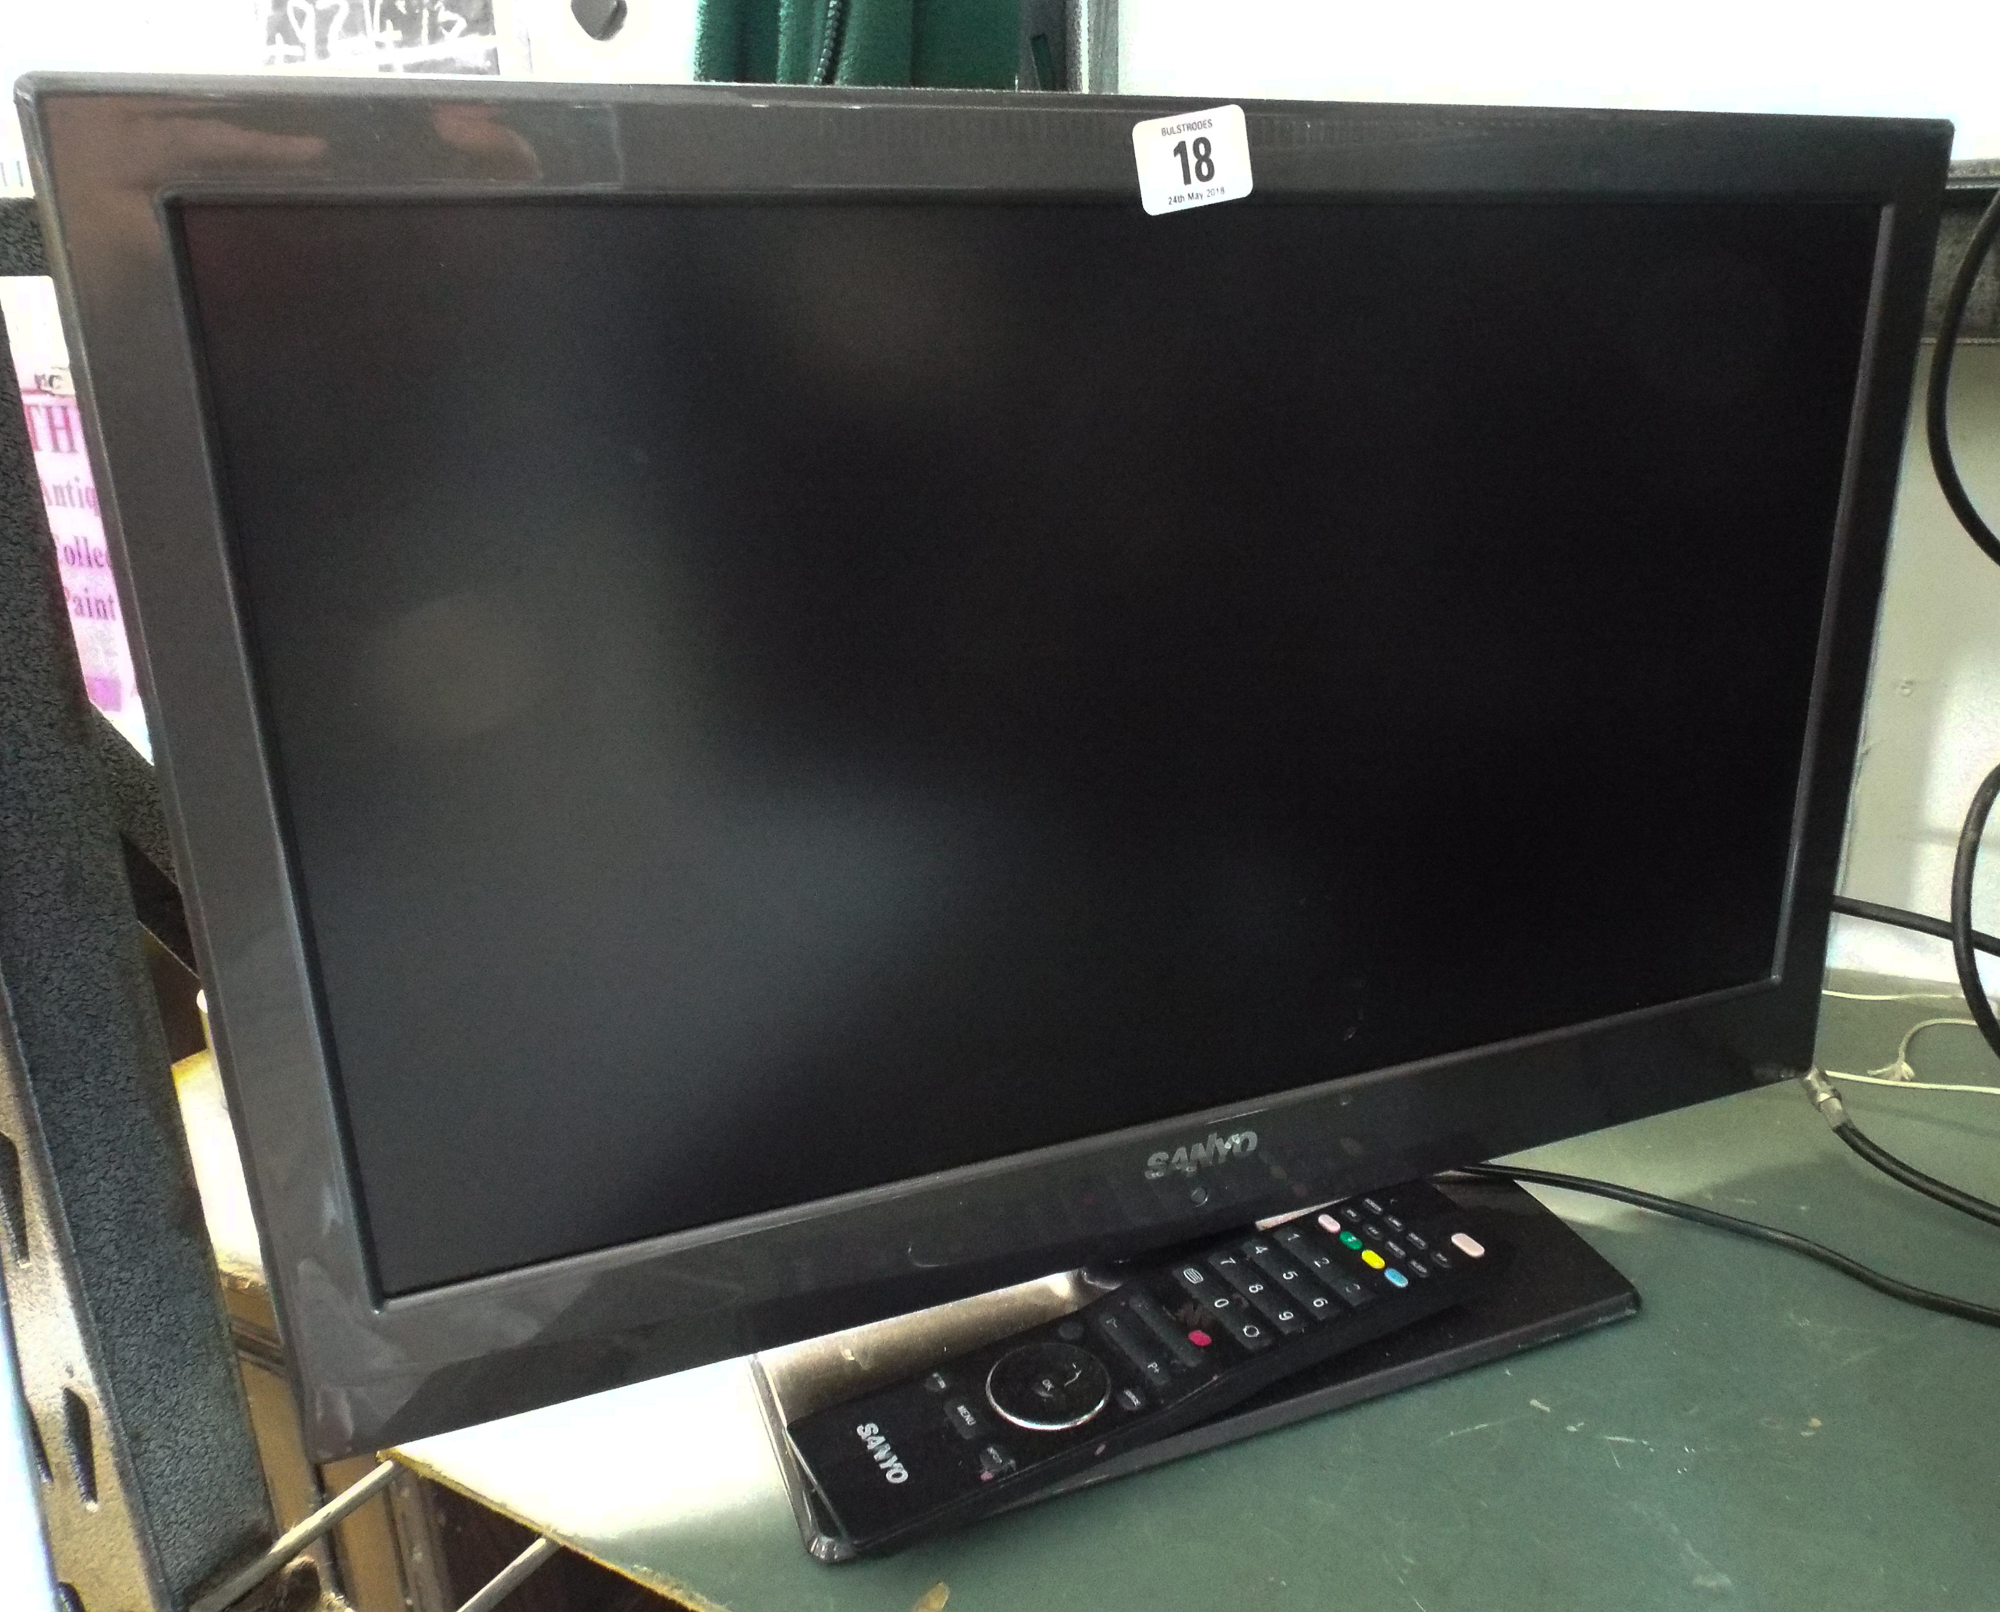 A Sangyaw 22" slimline digital LCD TV with freeview etc